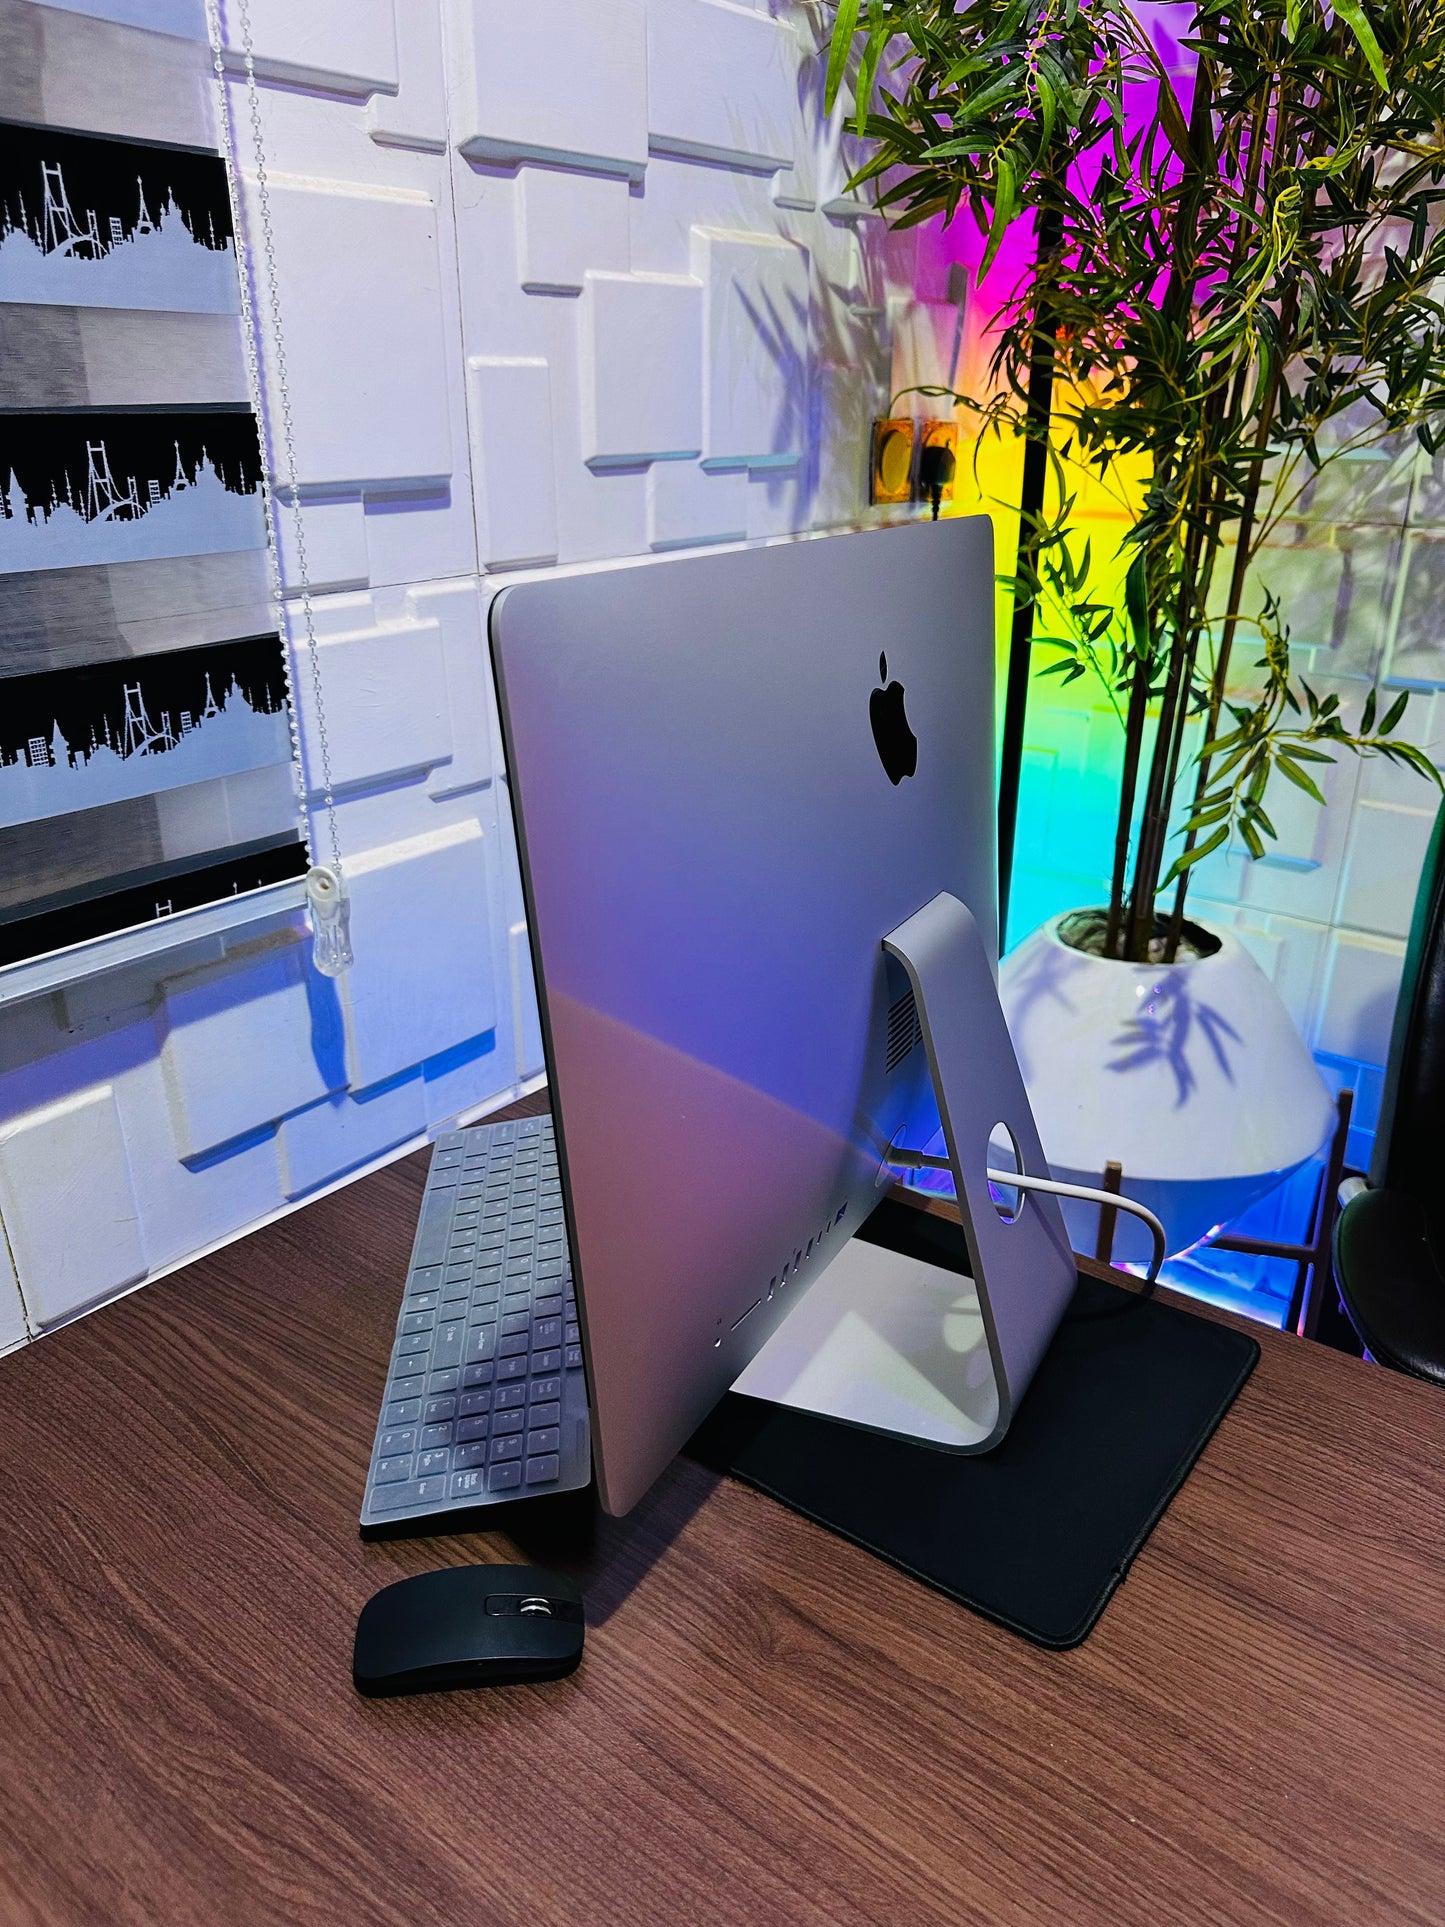 2013 Apple iMac A1418 - Intel Core i5 - 1TB HDD - 8GB RAM - 1.5GB Intel Iris Pro Graphics - (Minor crack on glass)